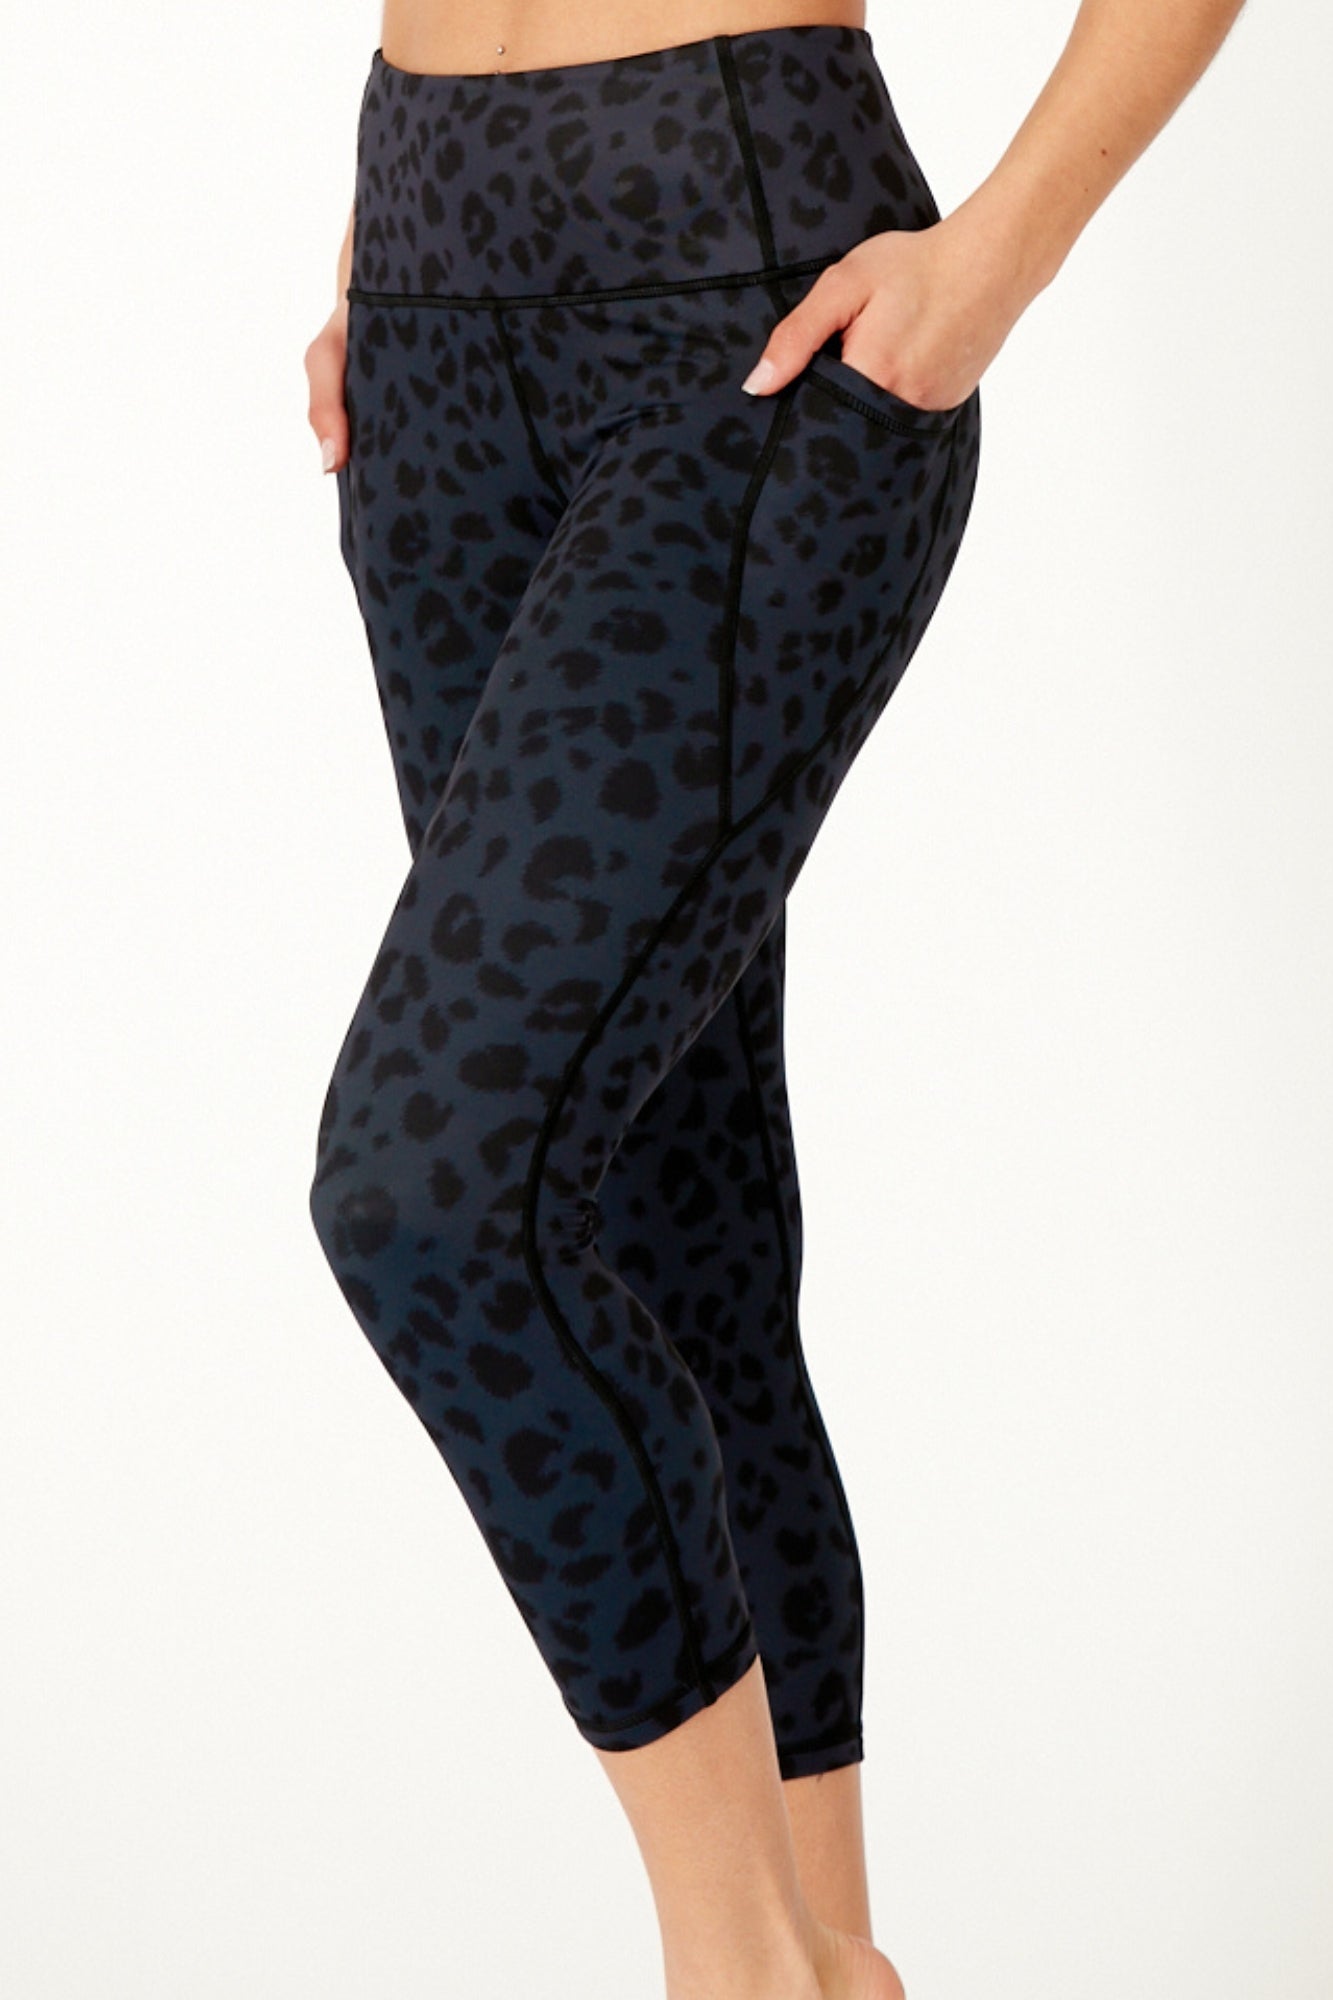 Smoothing Legging - Leopard